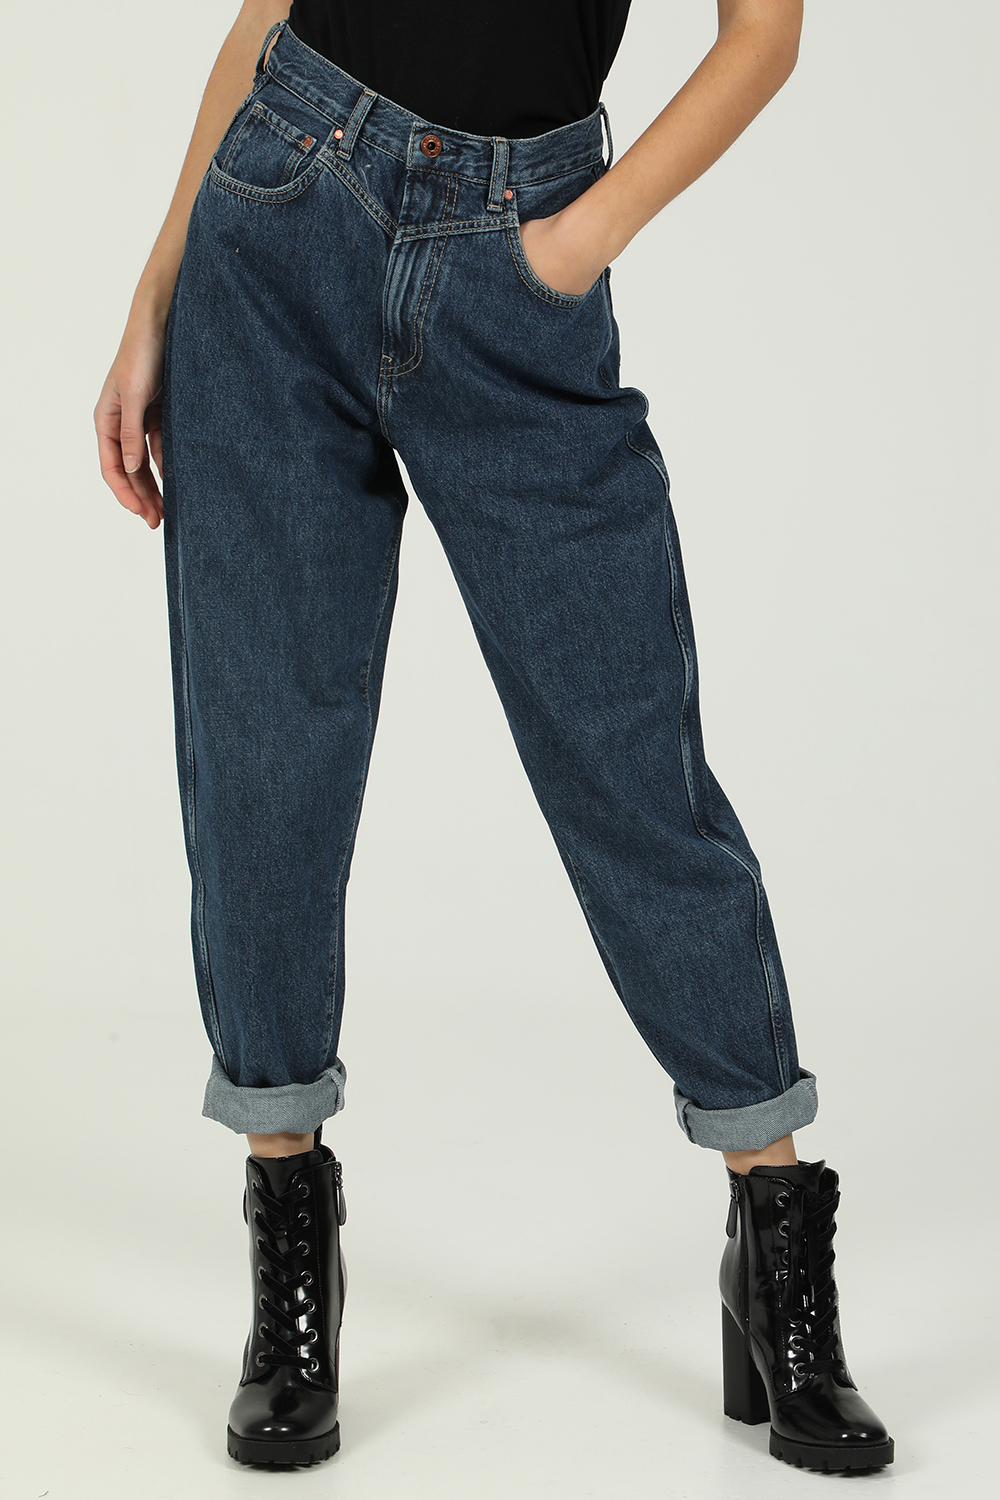 PEPE JEANS – Γυναικείο τζιν παντελόνι PEPE JEANS RACHEL μπλε 1822887.0-0015